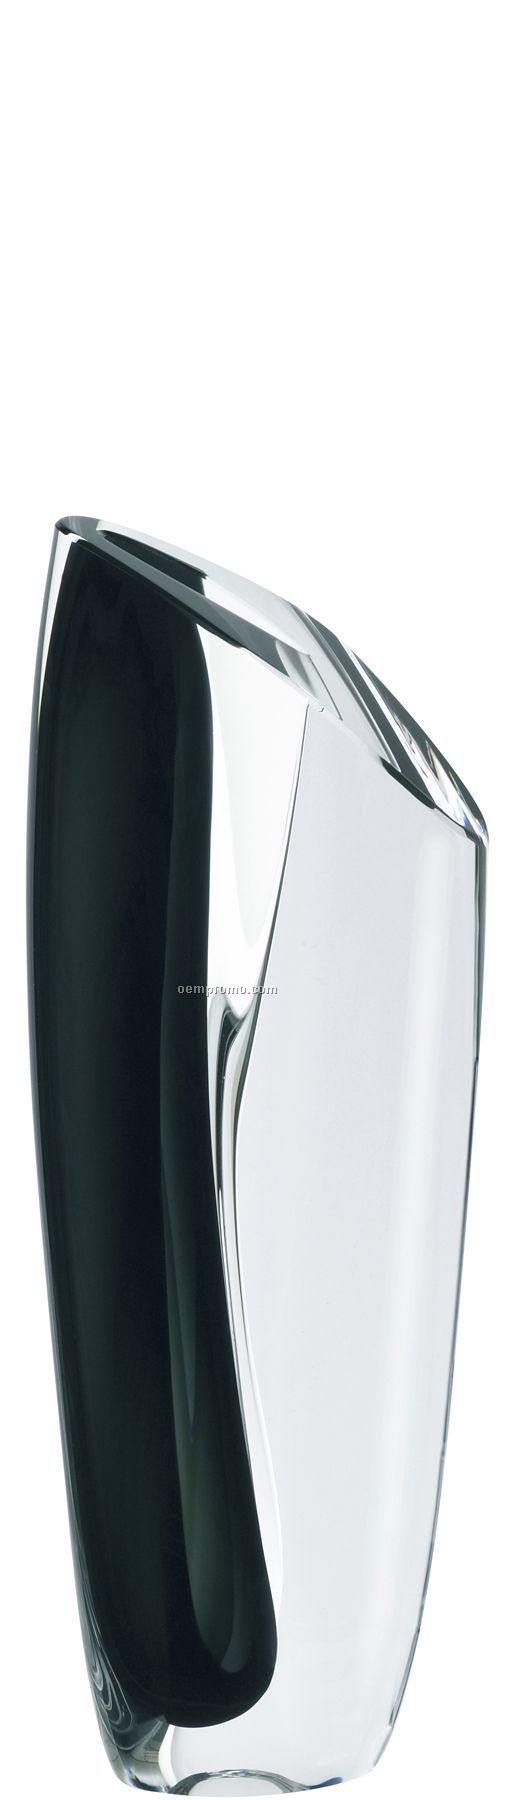 Saraband Small Crystal Vase By Goran Warff